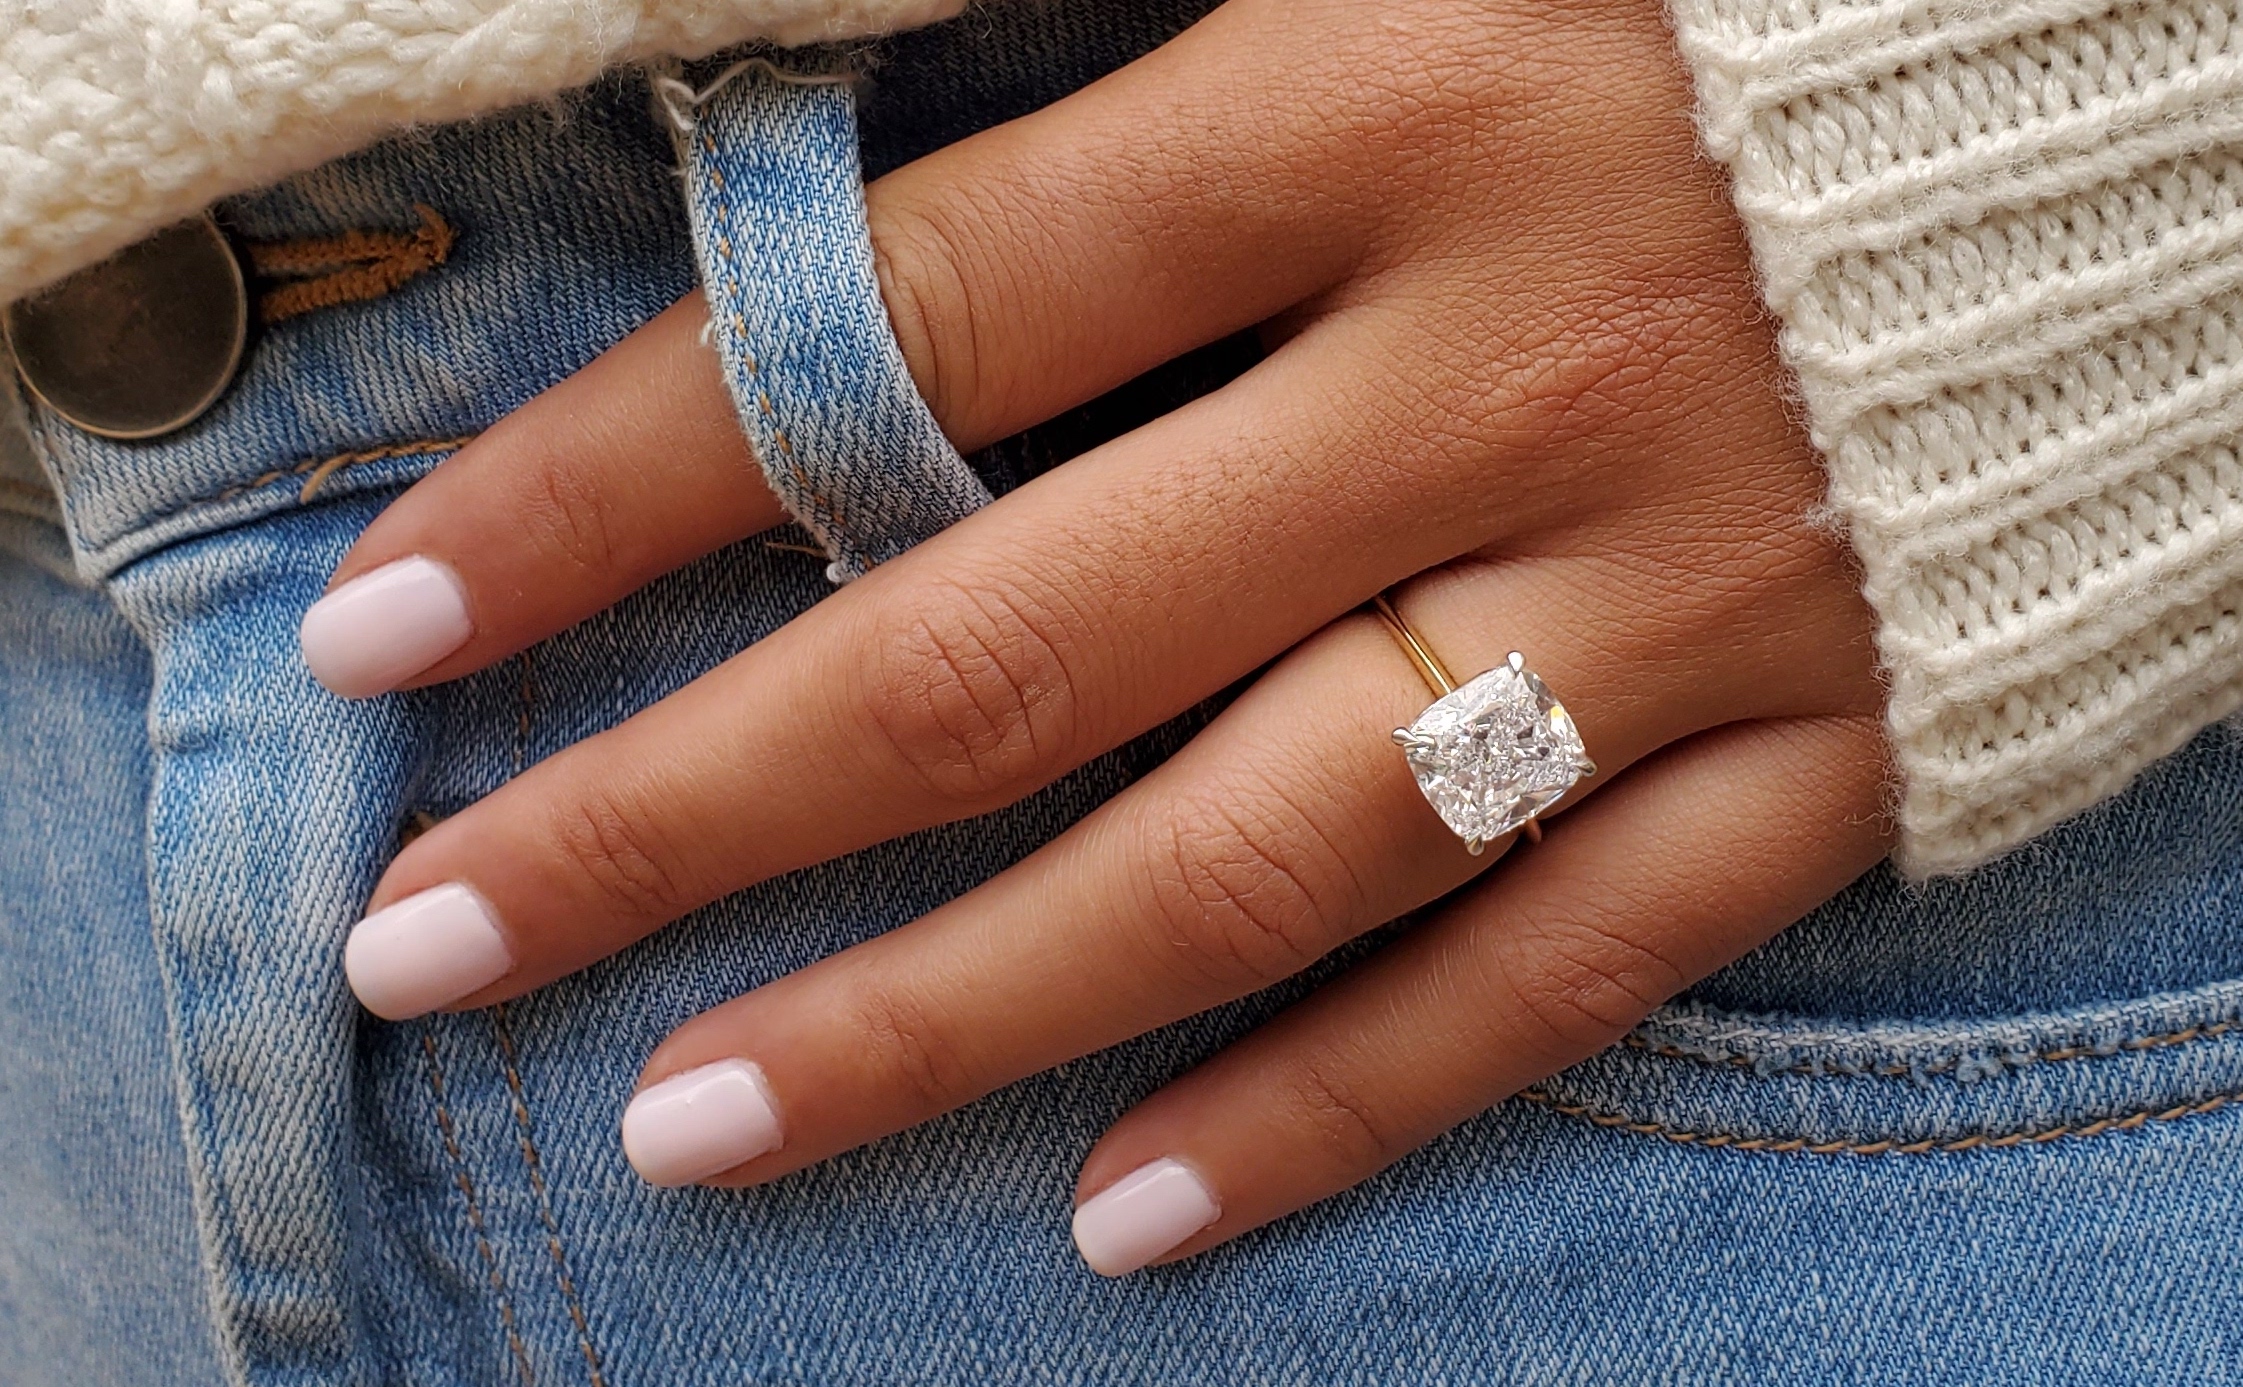 Emily Ratajkowski Turns Her Engagement Ring Into Two 'Divorce Rings' -  News18